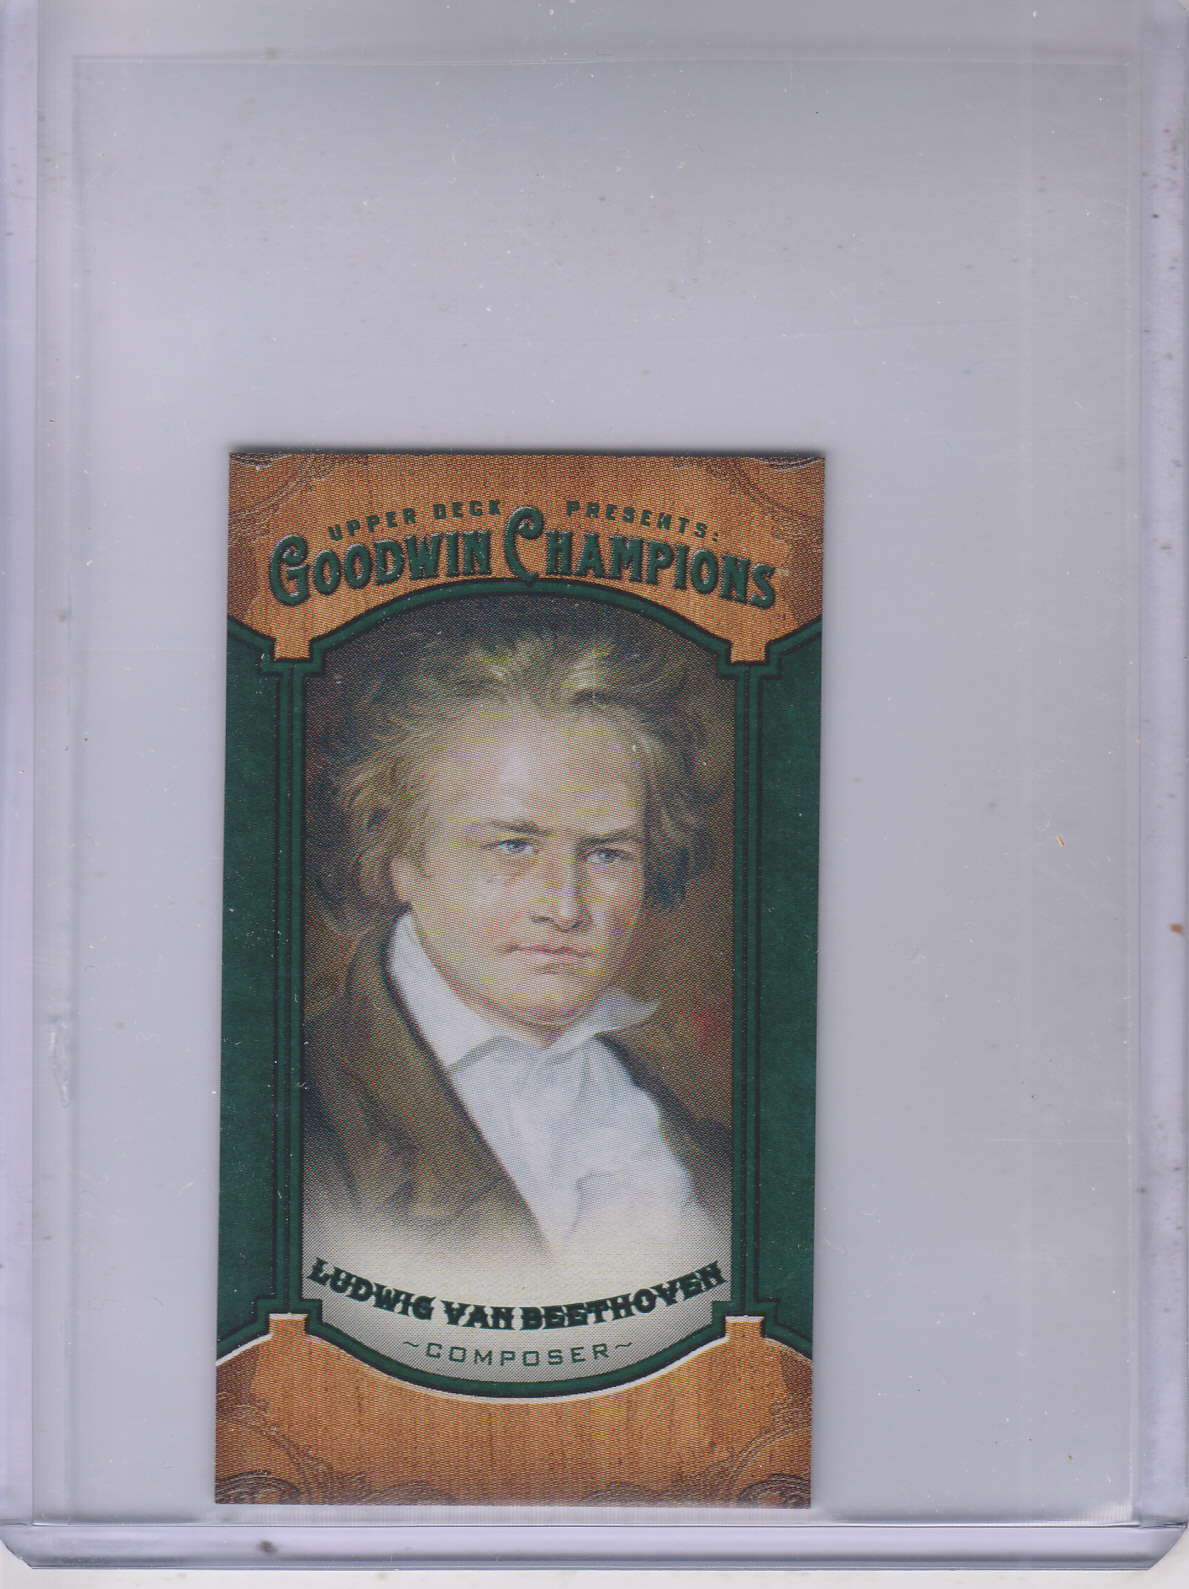  Ludwig van Beethoven (composer) player image